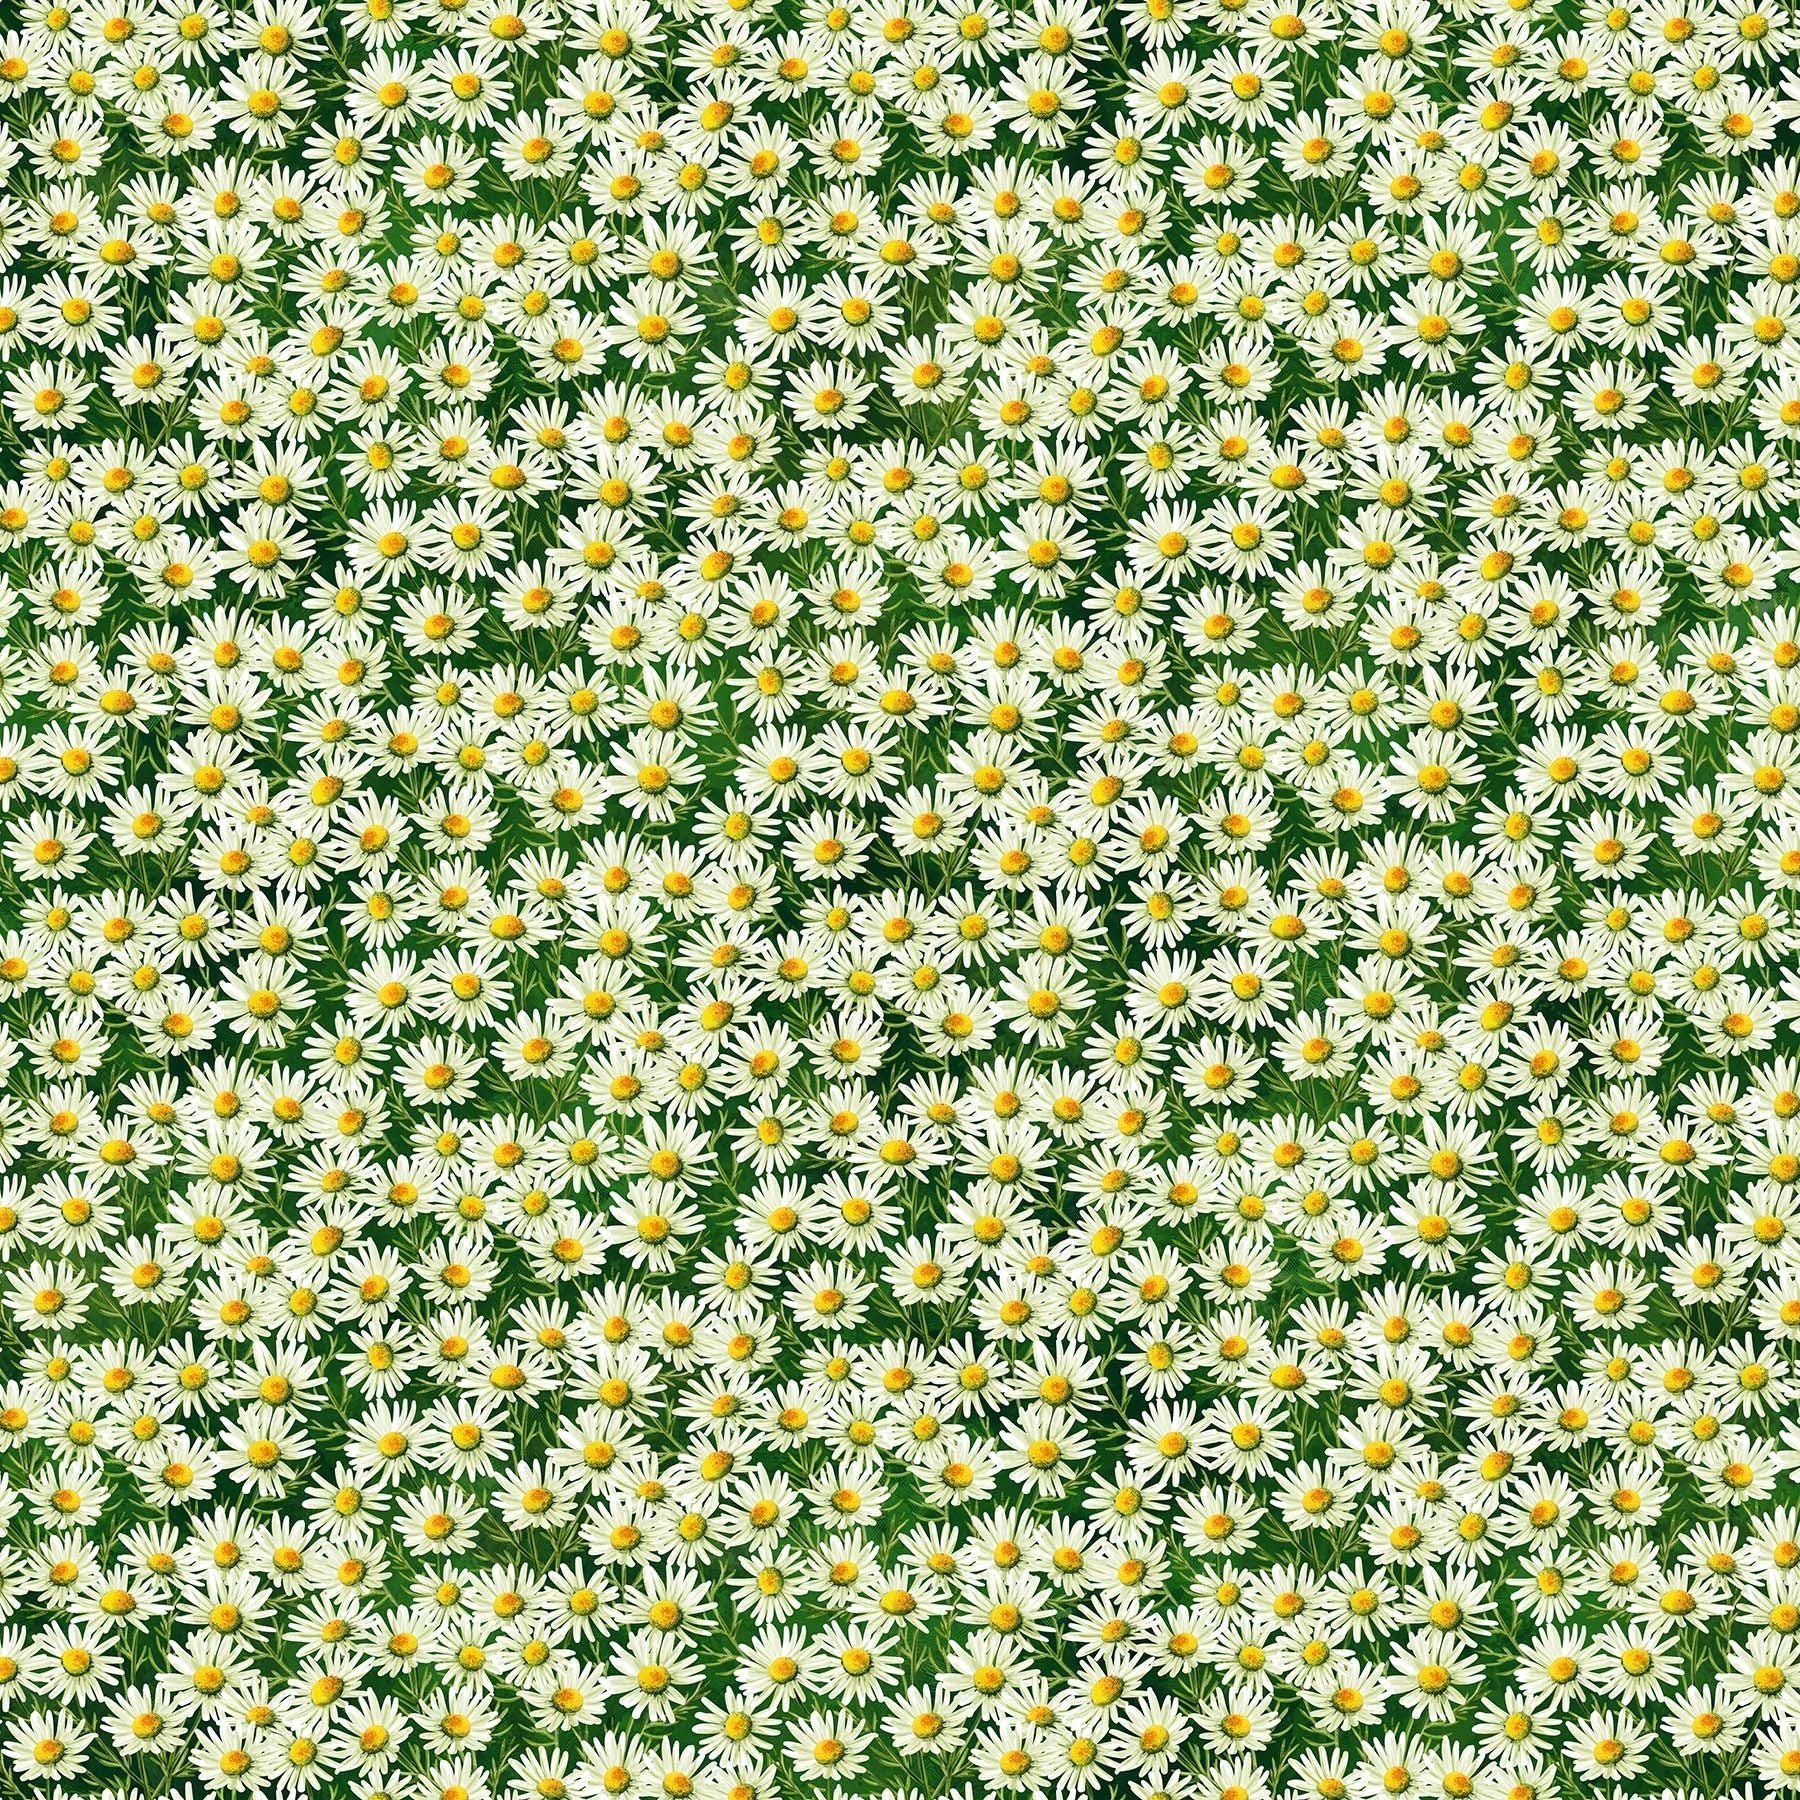 Northcott Fabric Panel Sunshine Harvest Packed Sunflower Floral Cotton 25456-78